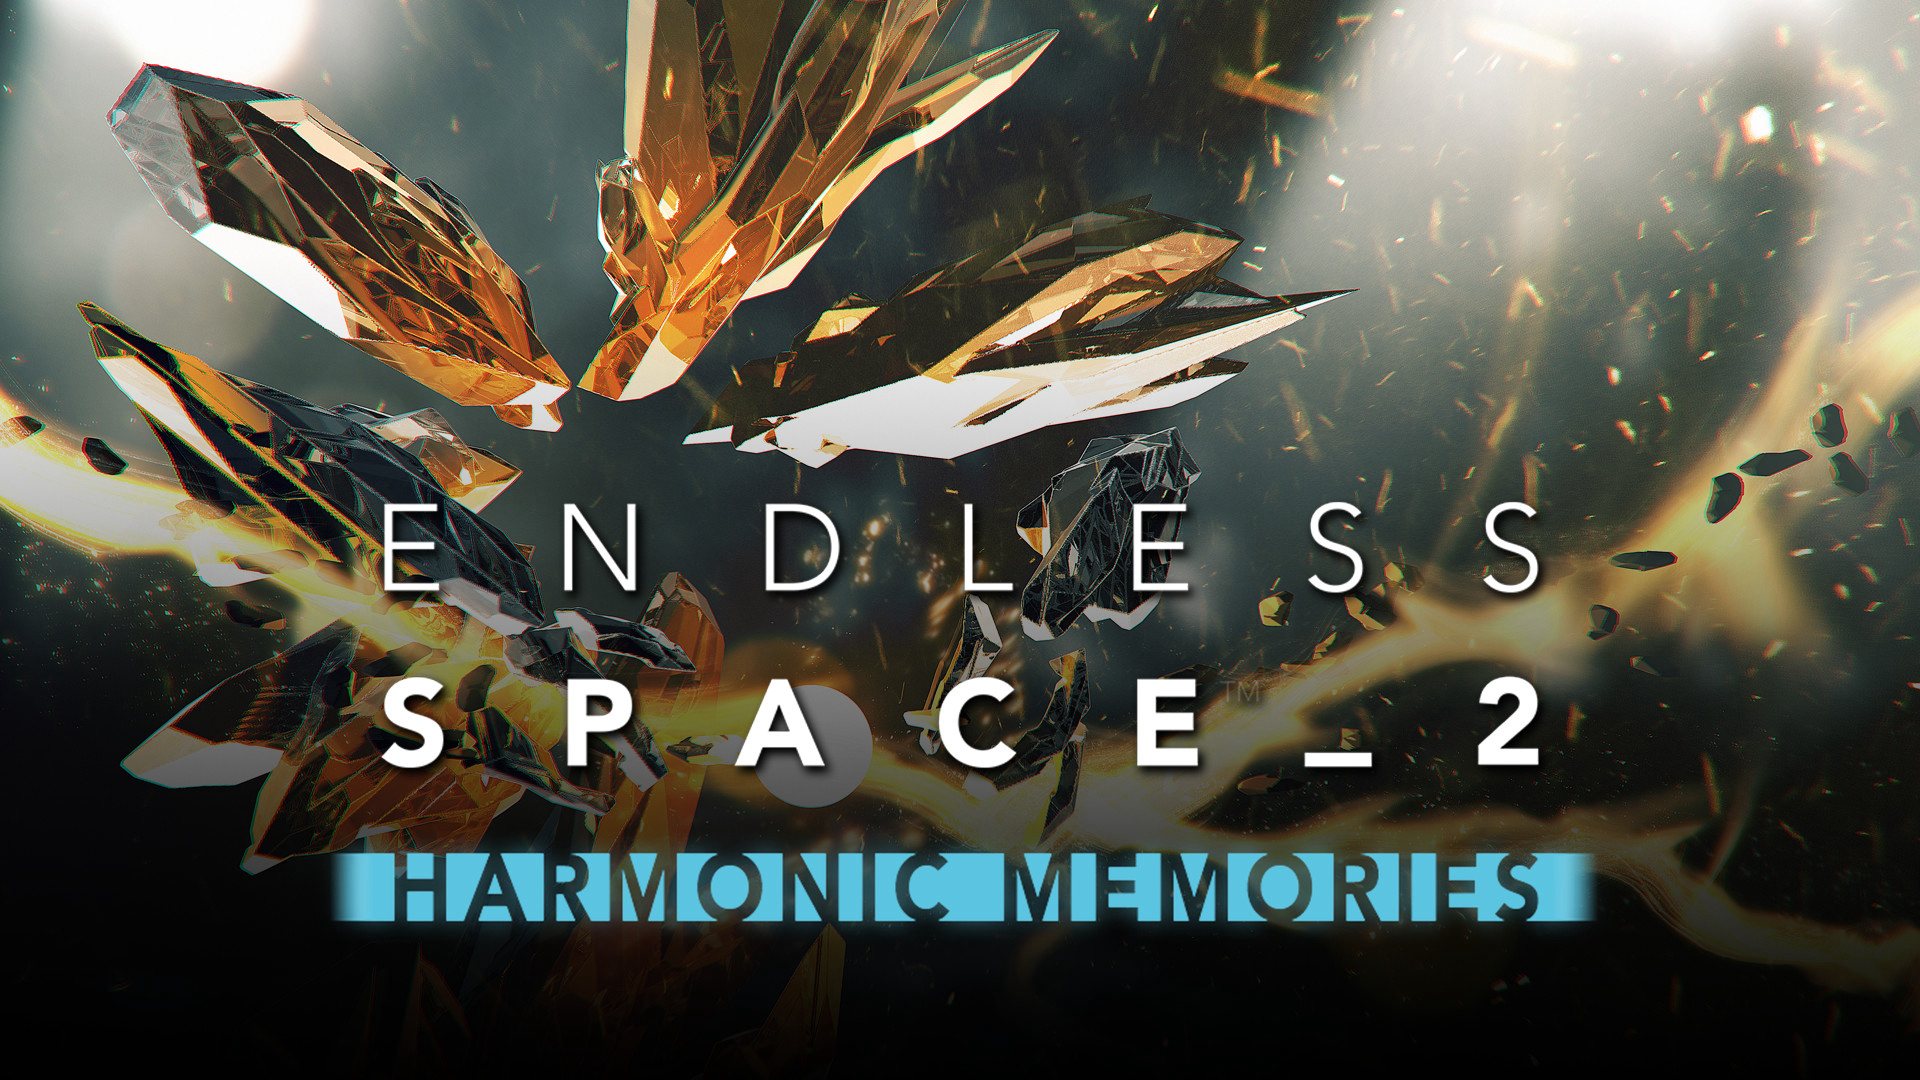 Endless Space 2 - Harmonic Memories DLC Steam CD Key, $1.45